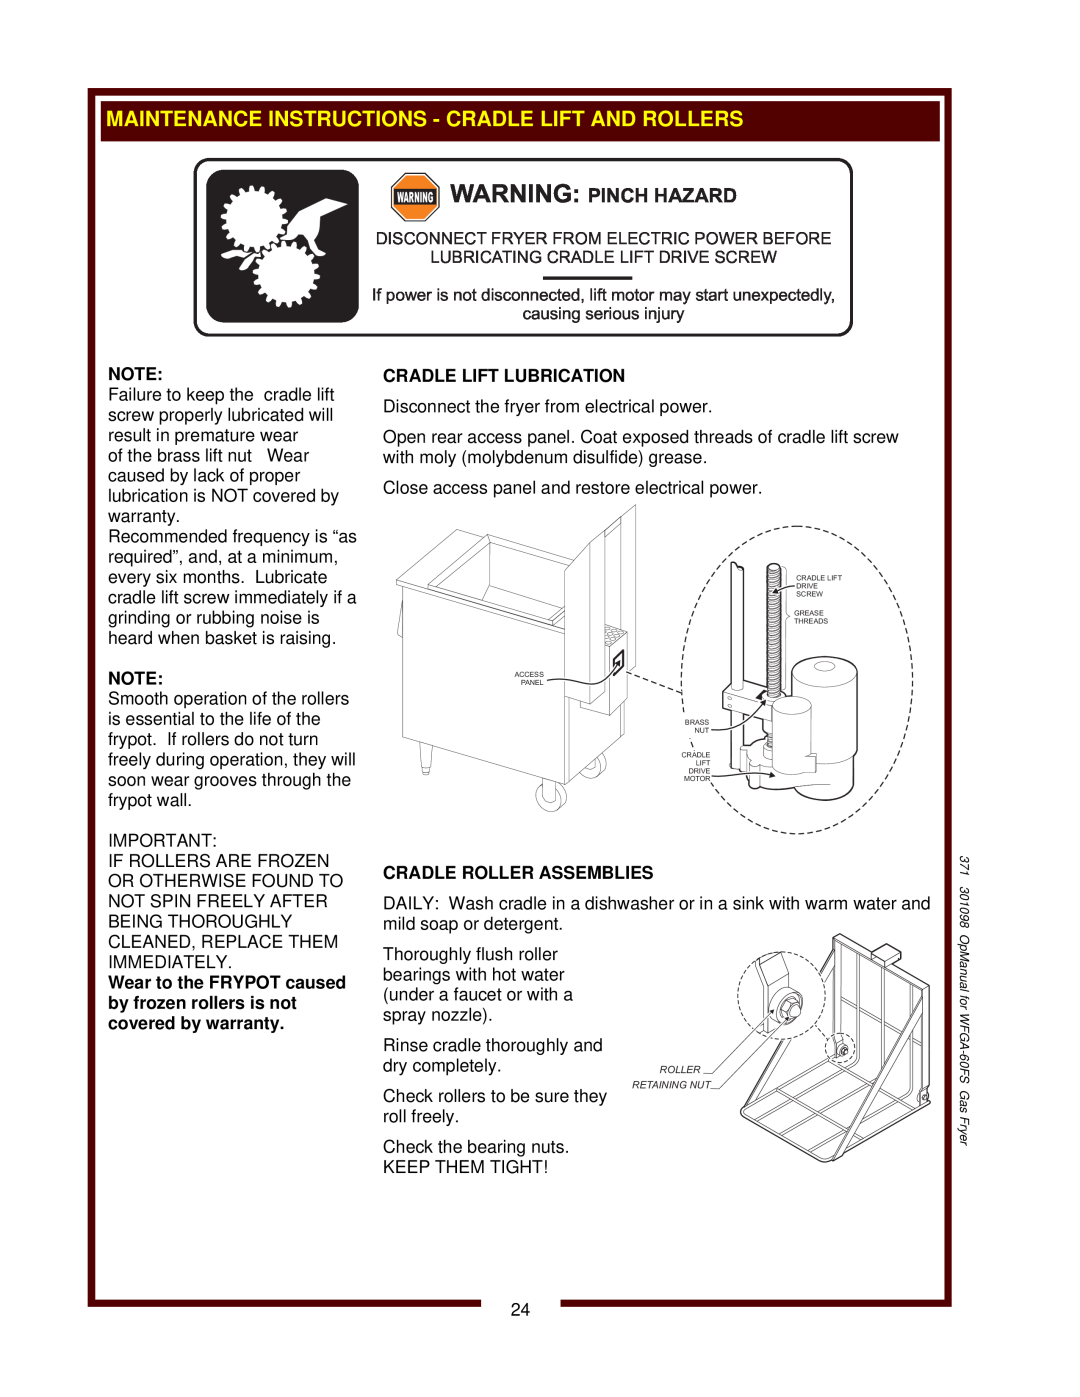 Wells WFGA-60FS Maintenance Instructions - Cradle Lift And Rollers, Warning Warning Pinch Hazard, causing serious injury 